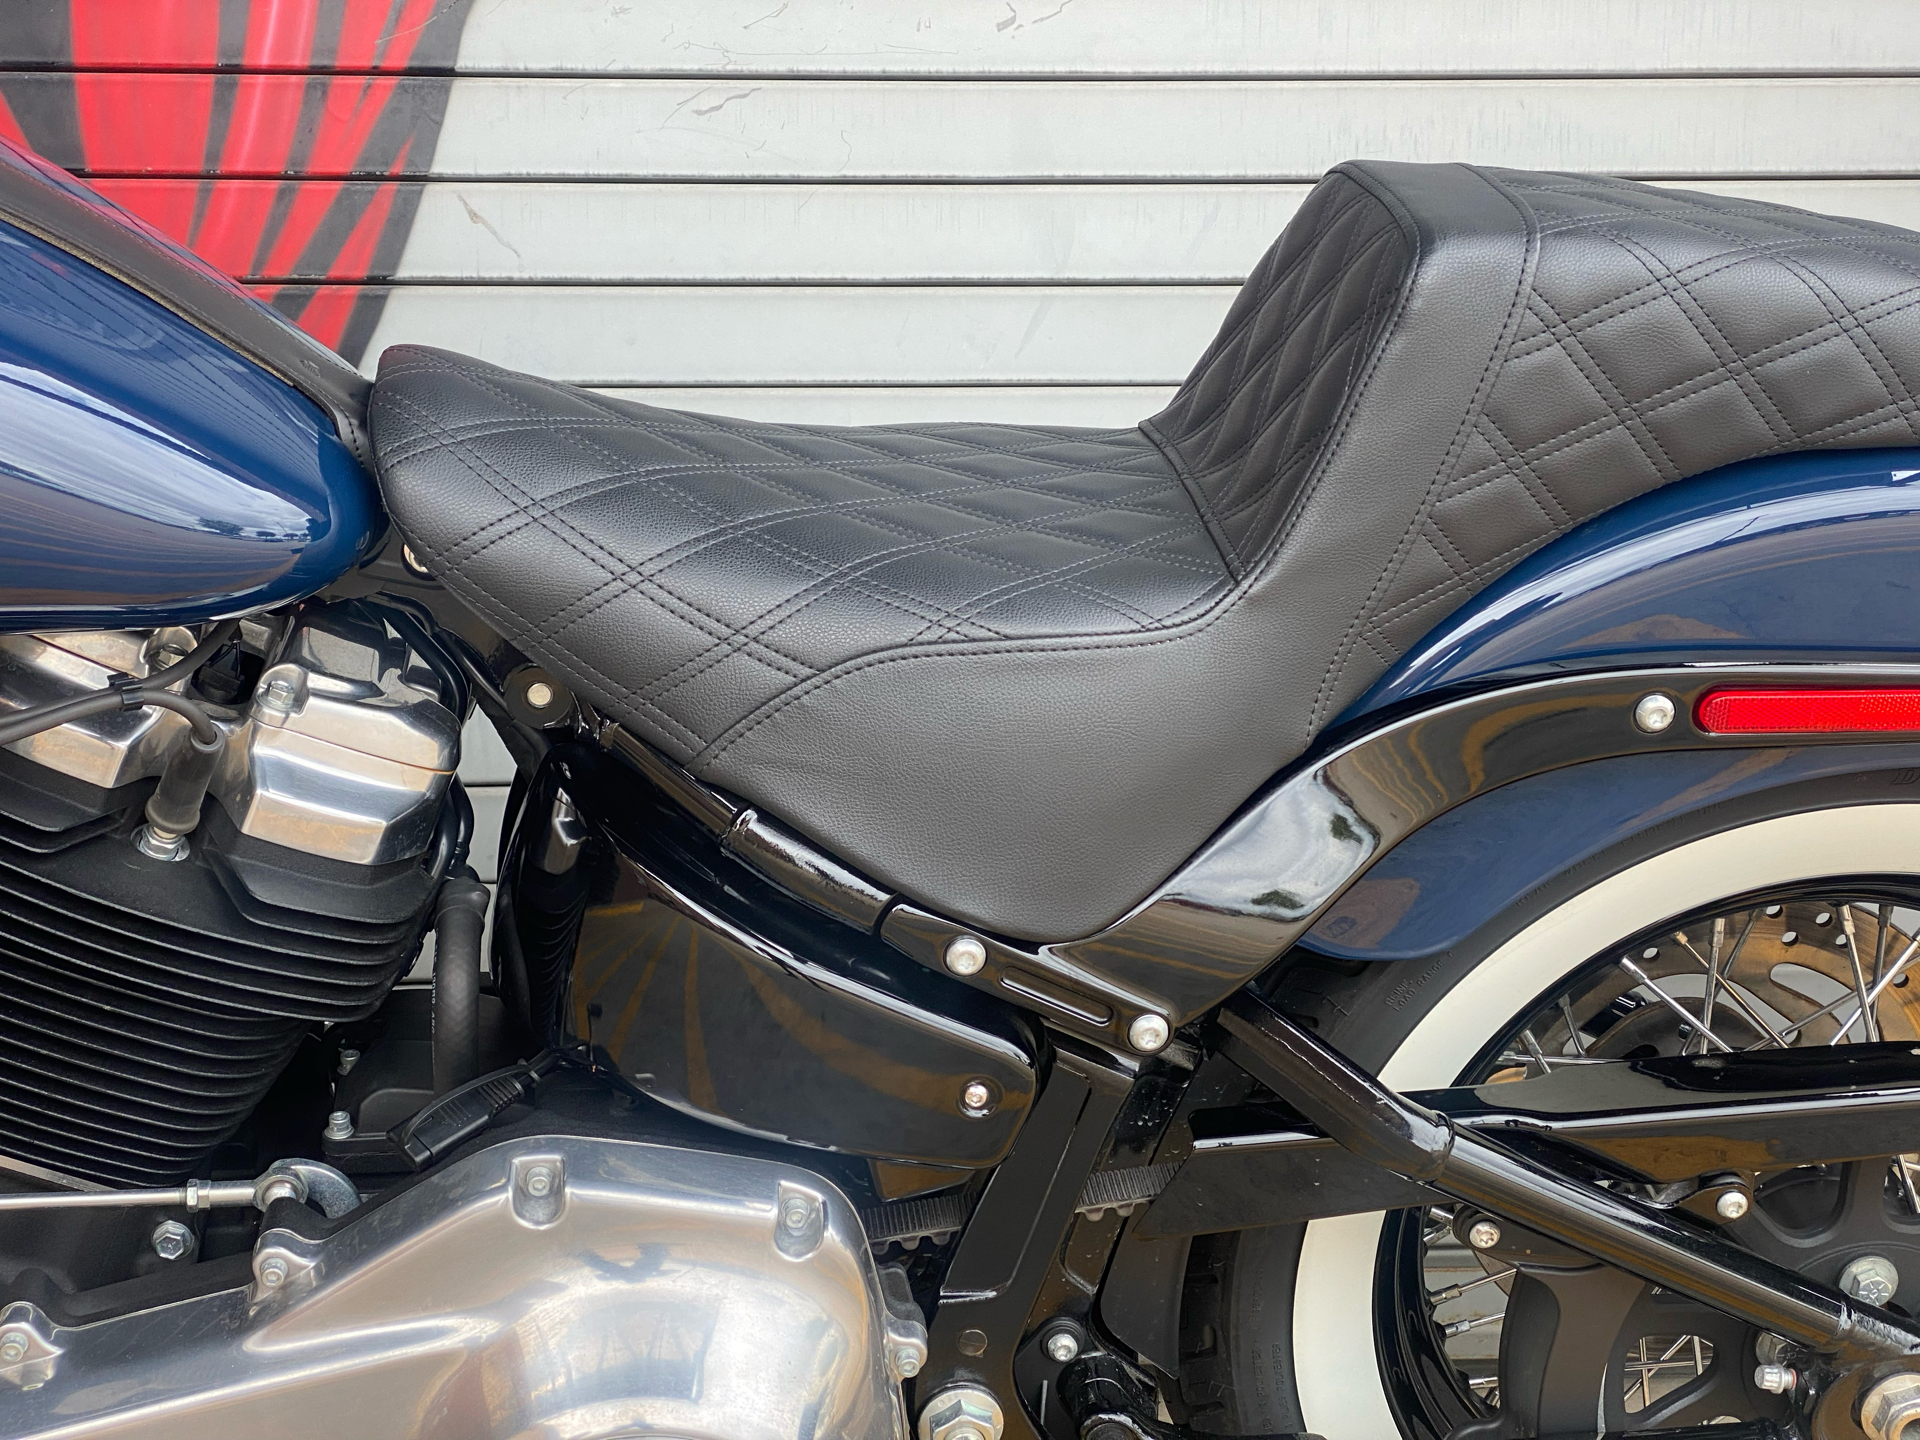 2019 Harley-Davidson Softail Slim® in Carrollton, Texas - Photo 19